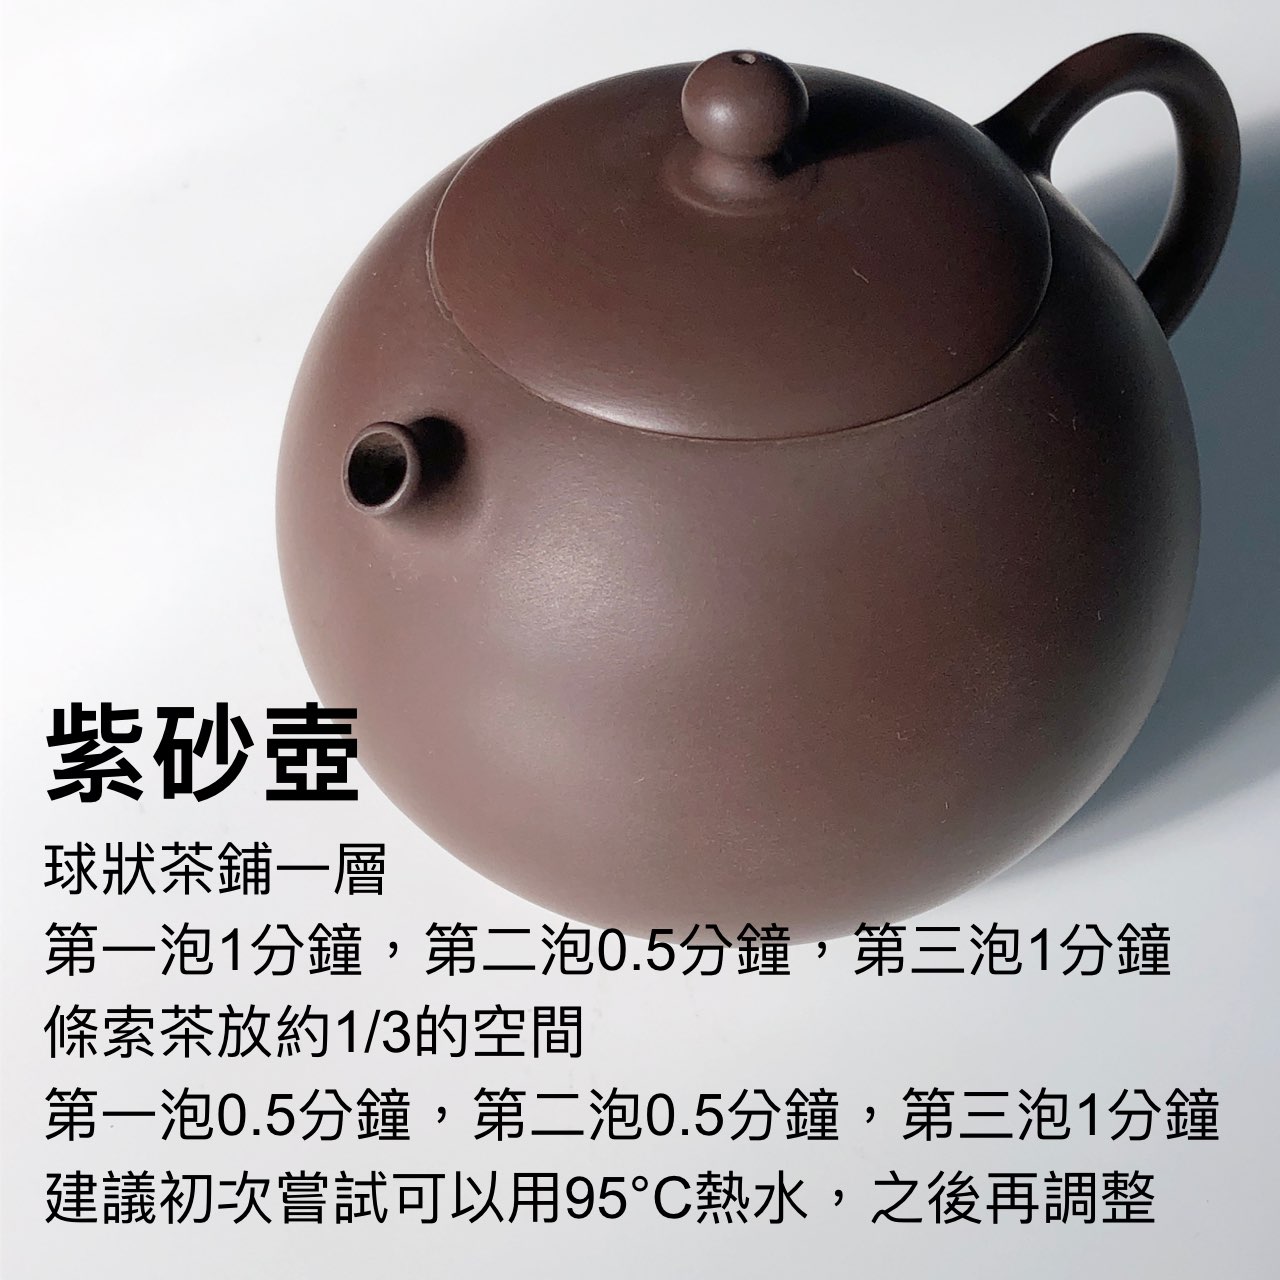 紫砂壺、泡茶、Make tea, tea pot, how to make tea